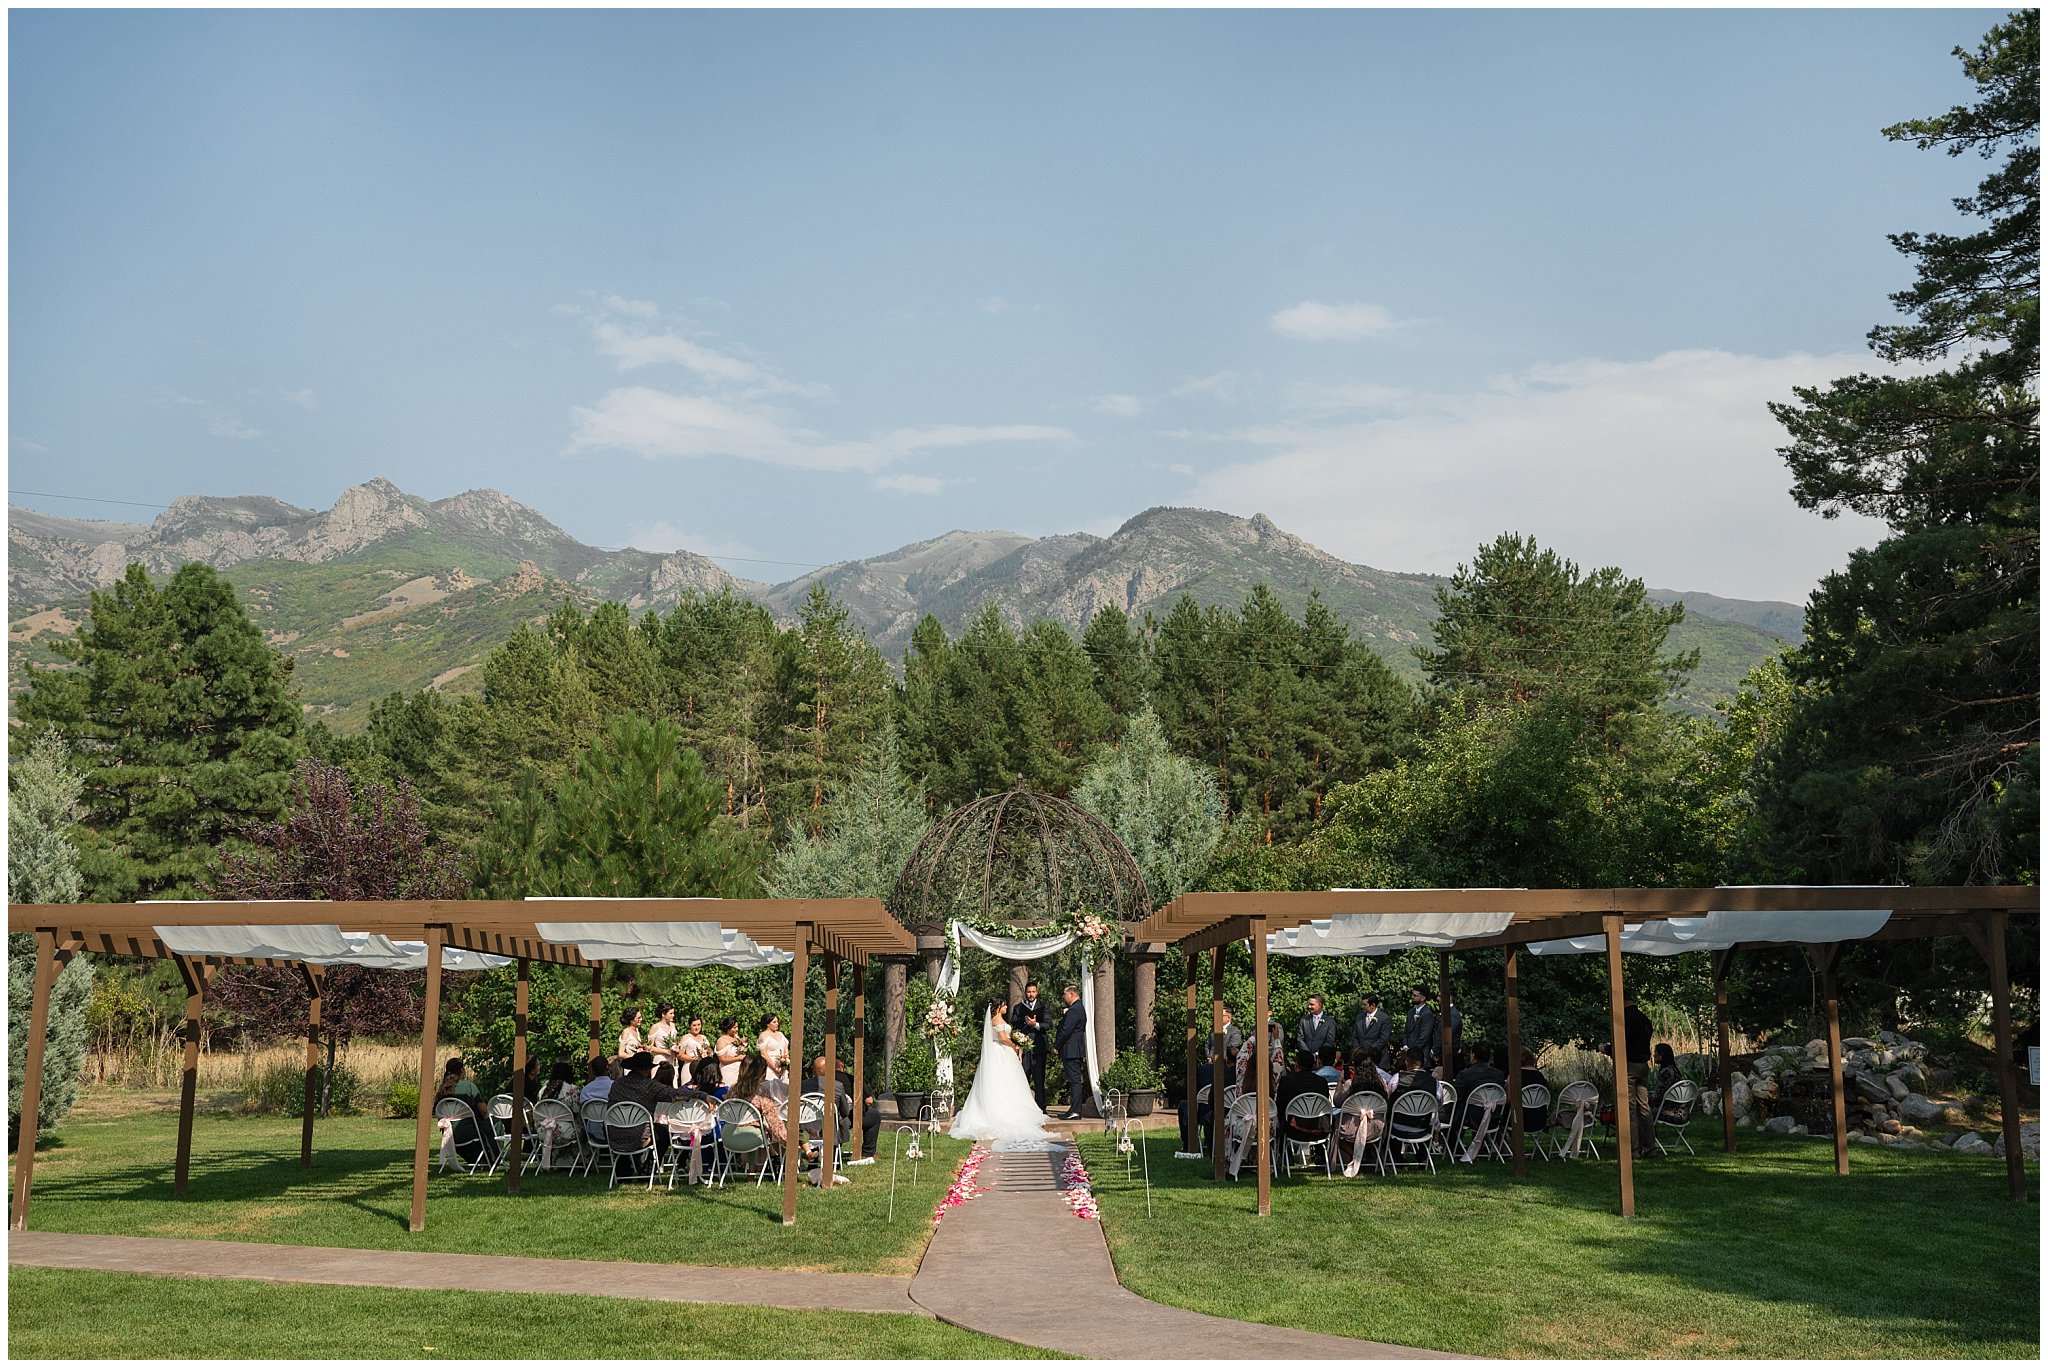 Utah mountain ceremony site | Rustic Mountain Destination Wedding at Oak Hills Utah | Jessie and Dallin Photography